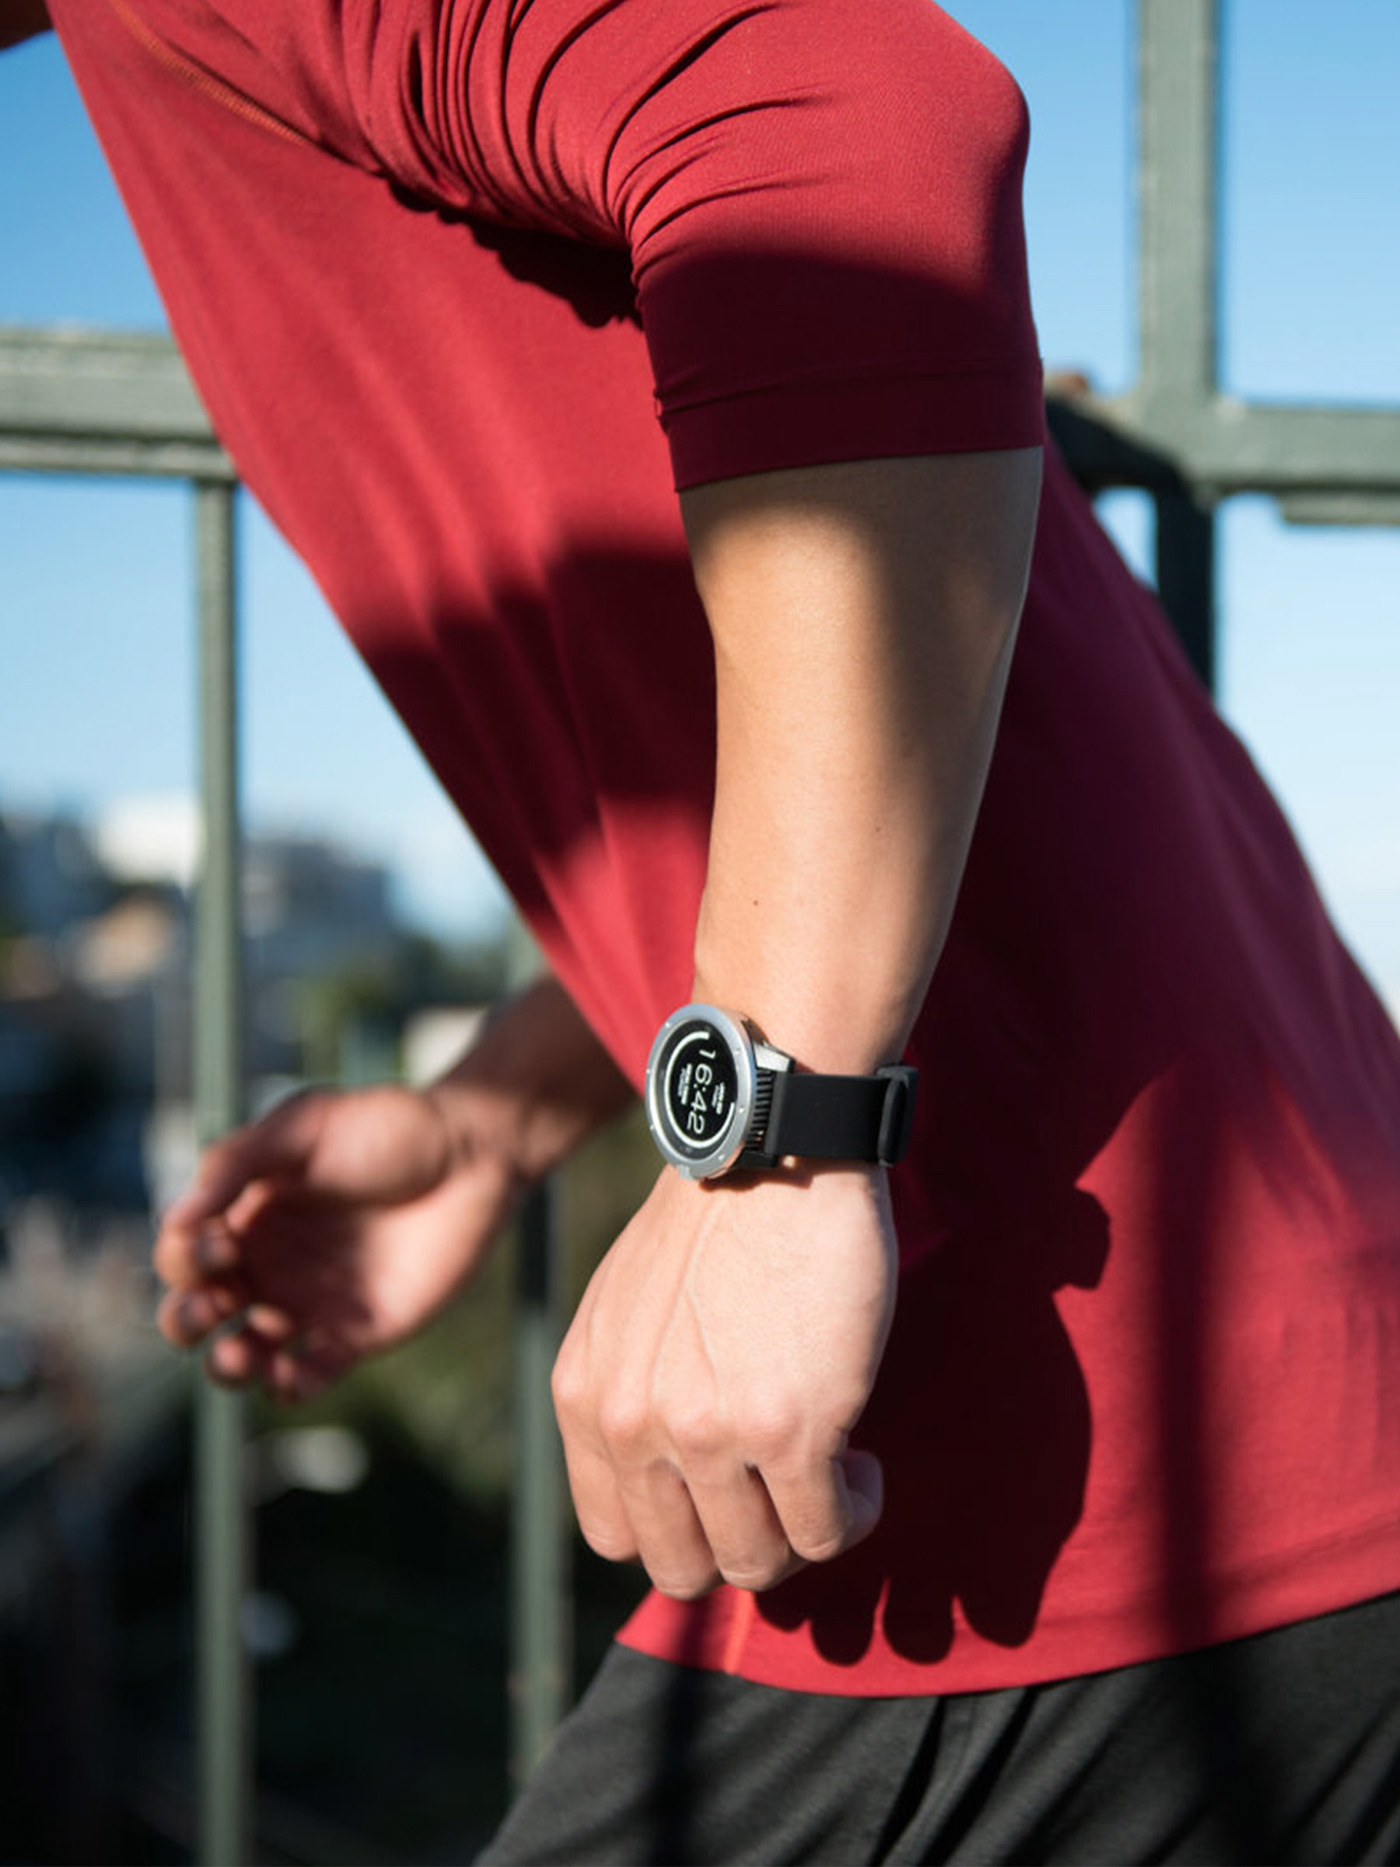 watch smartwatch digital aluminum Hong Kong Sustainable sport Analogue Wearable industrial design 